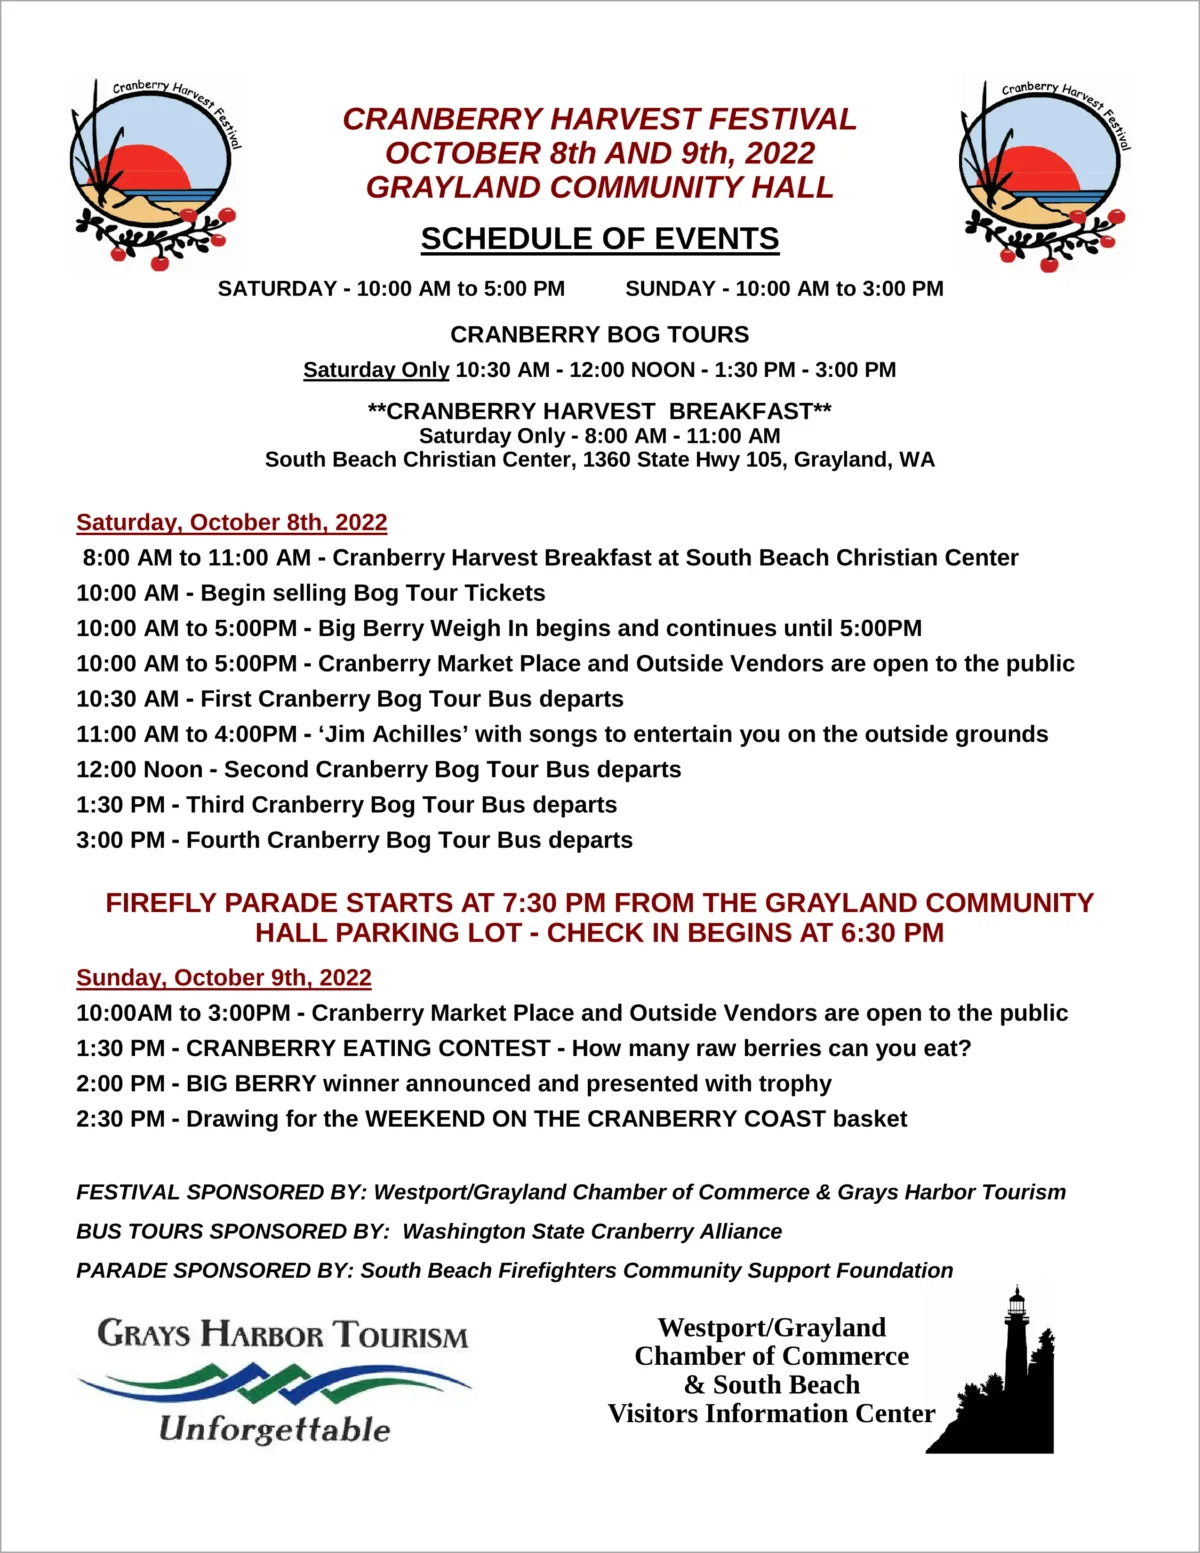 Cranberry Festival Schedule of Events (webp)